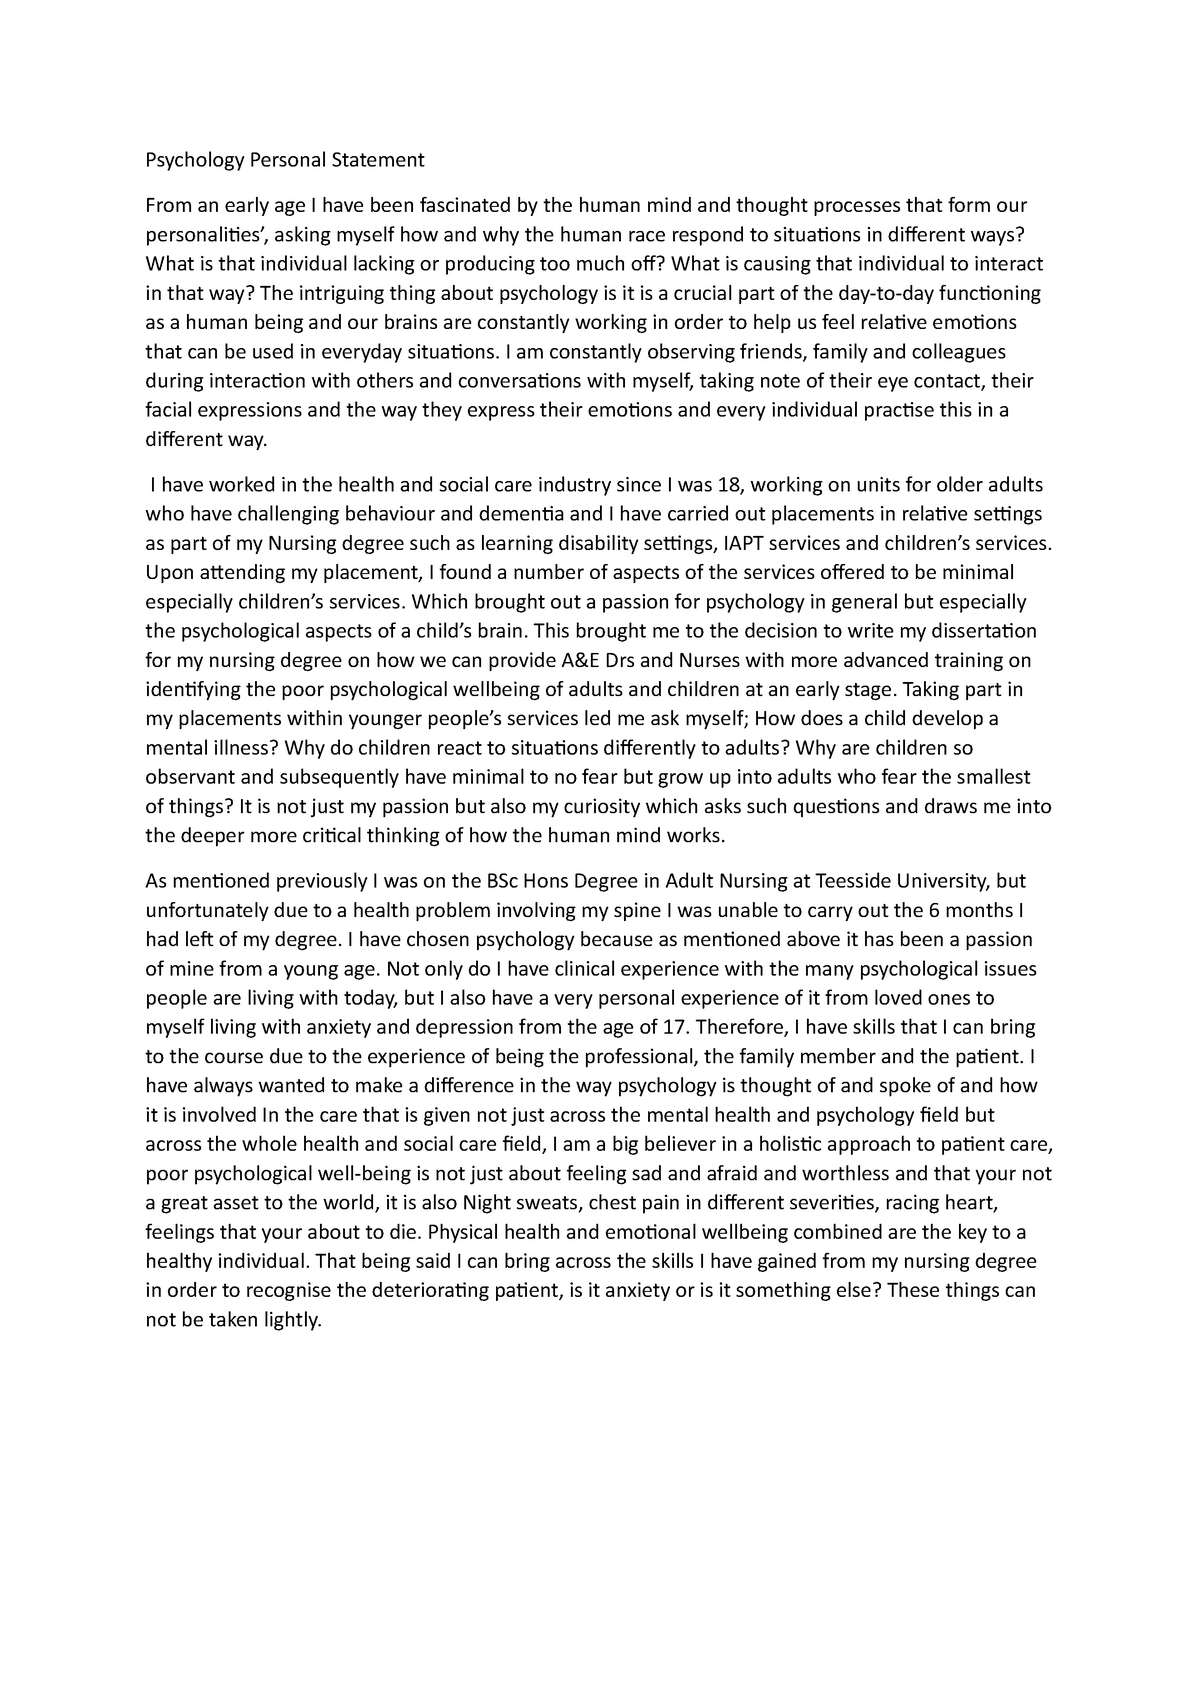 psychology personal statement pdf